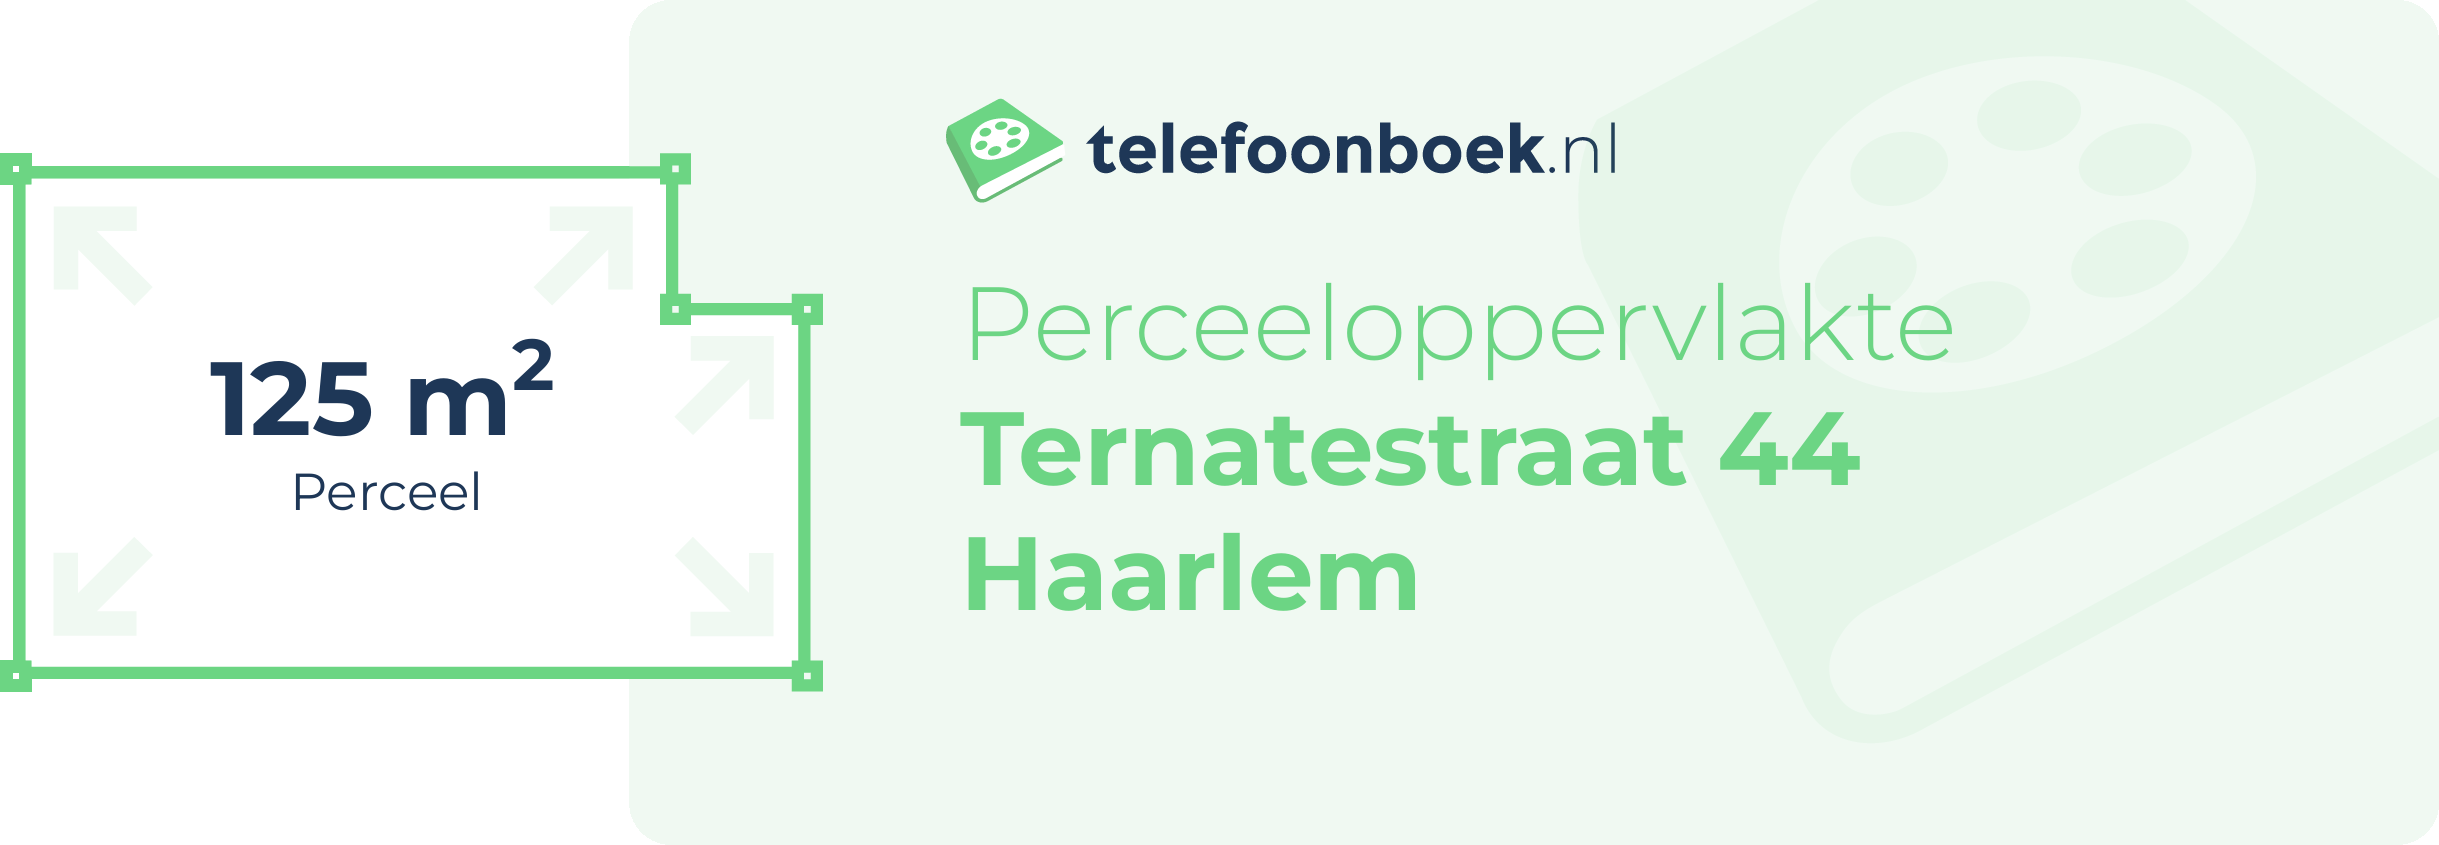 Perceeloppervlakte Ternatestraat 44 Haarlem